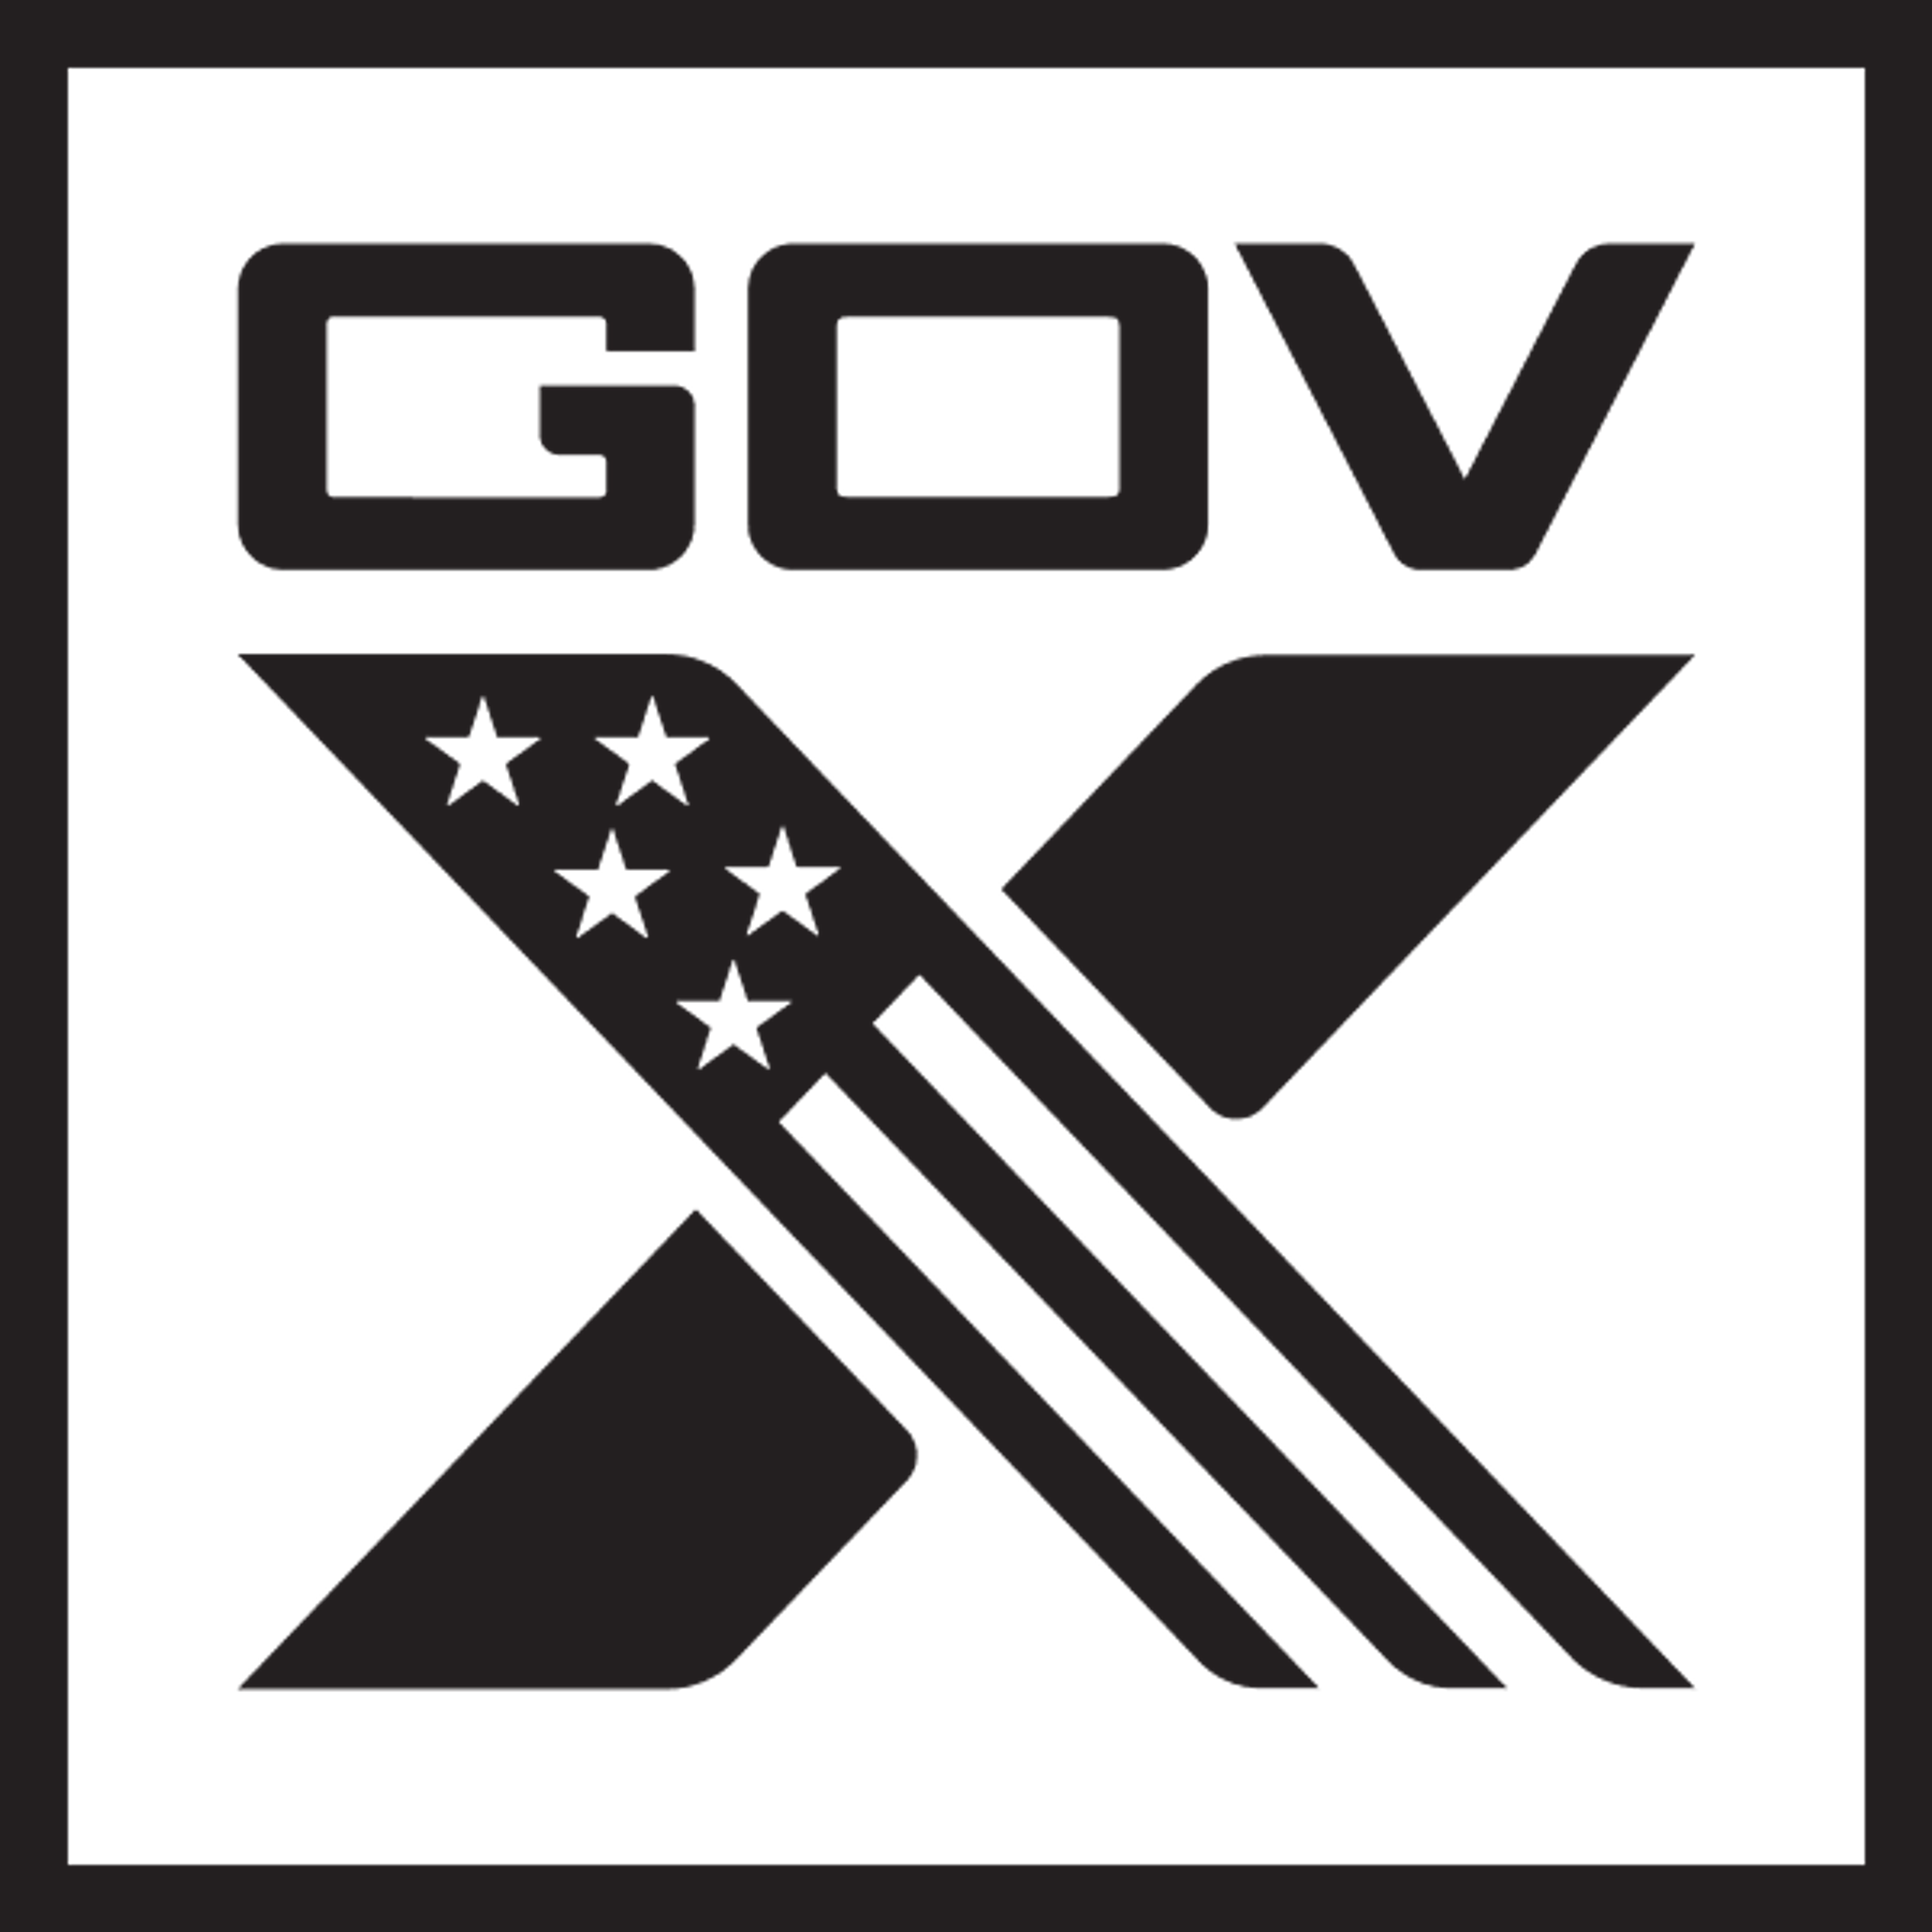 govx logo